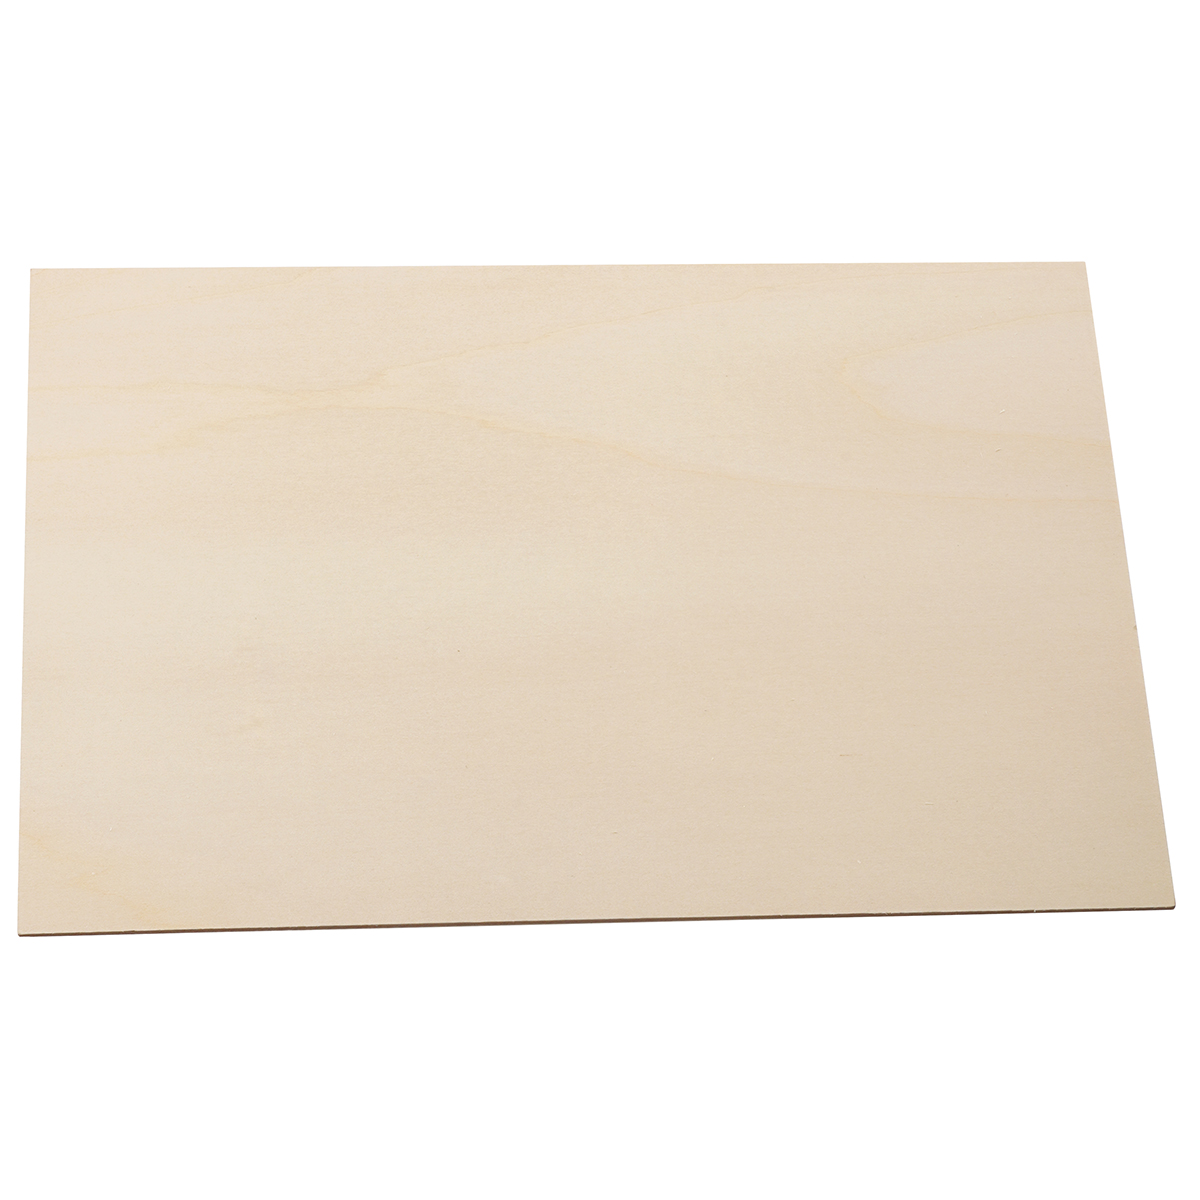 ATOMSTACK-10Pcs-Basswood-DIY-Wood-Sheet-3mm-Thick-Laser-Engraving-Cutting-Materials-Blank-Sheet-Wood-1956075-8